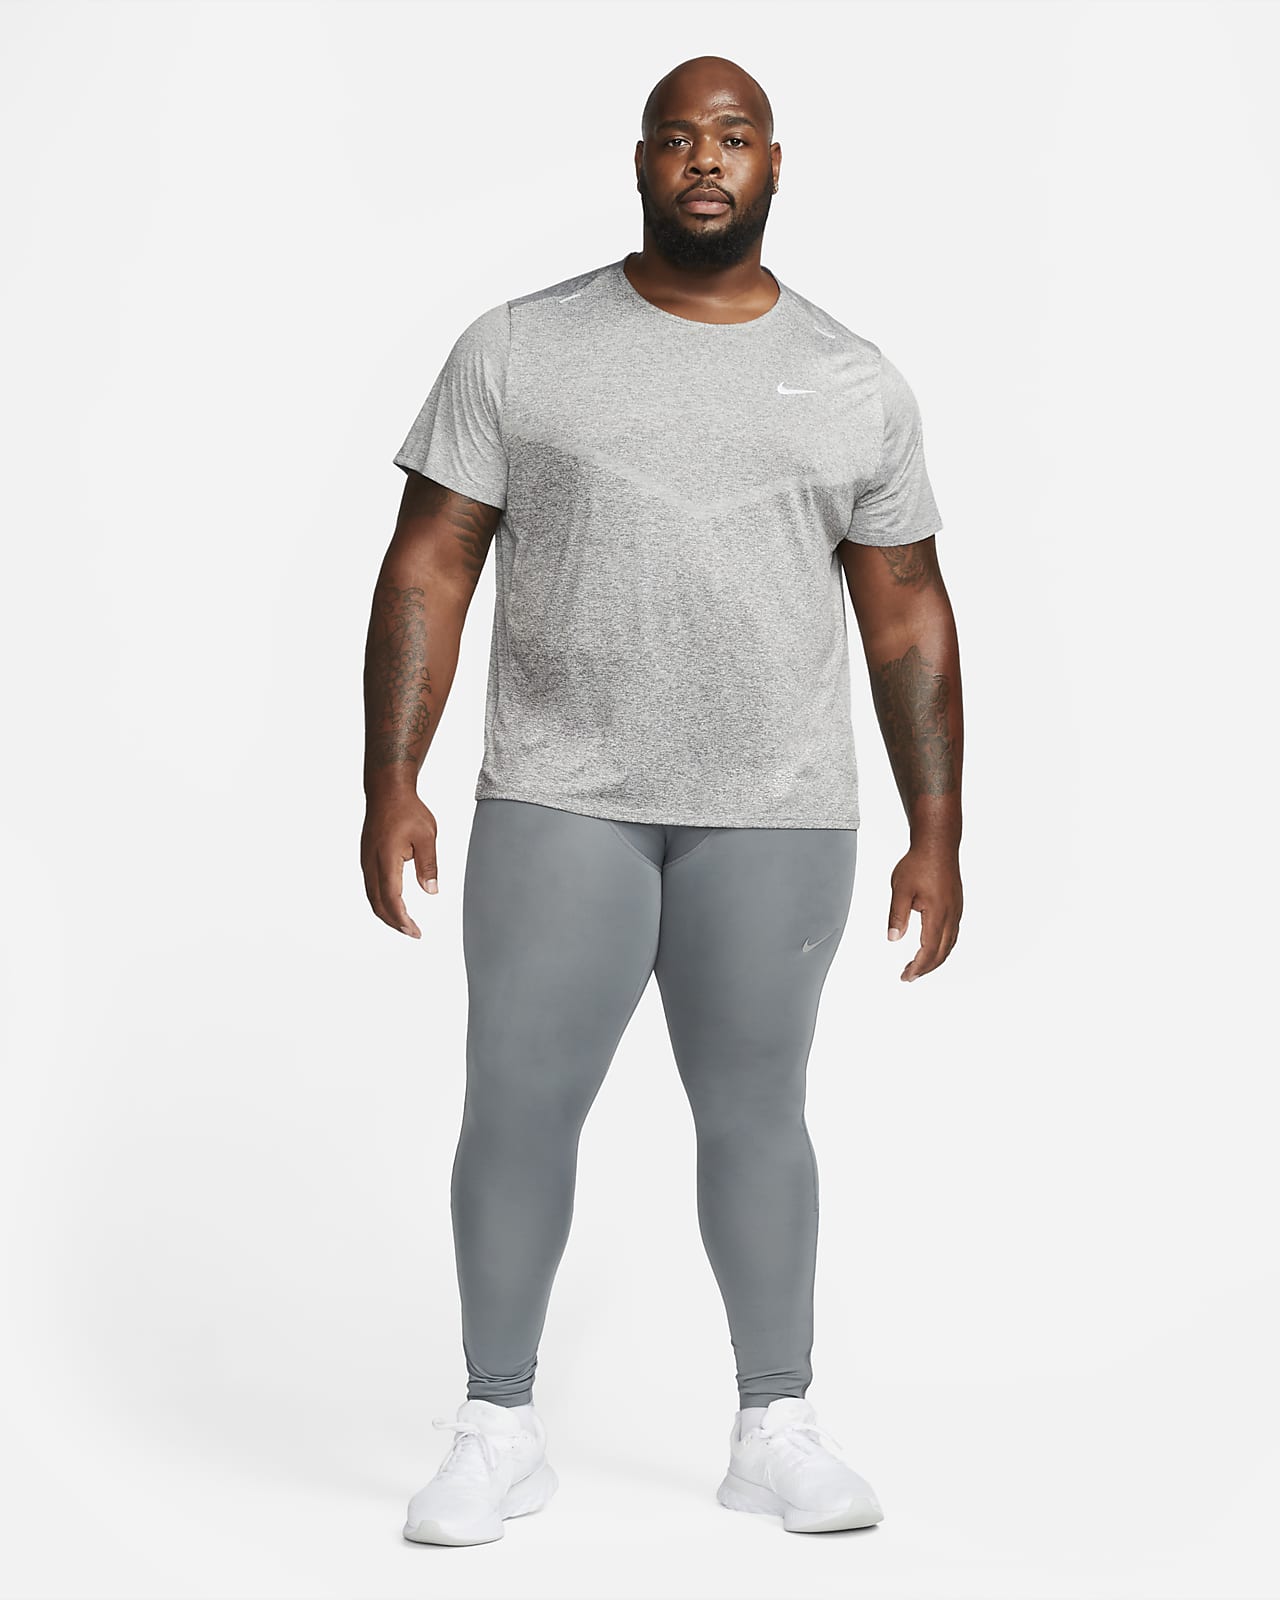 Nike Running Clothing Mens Tights